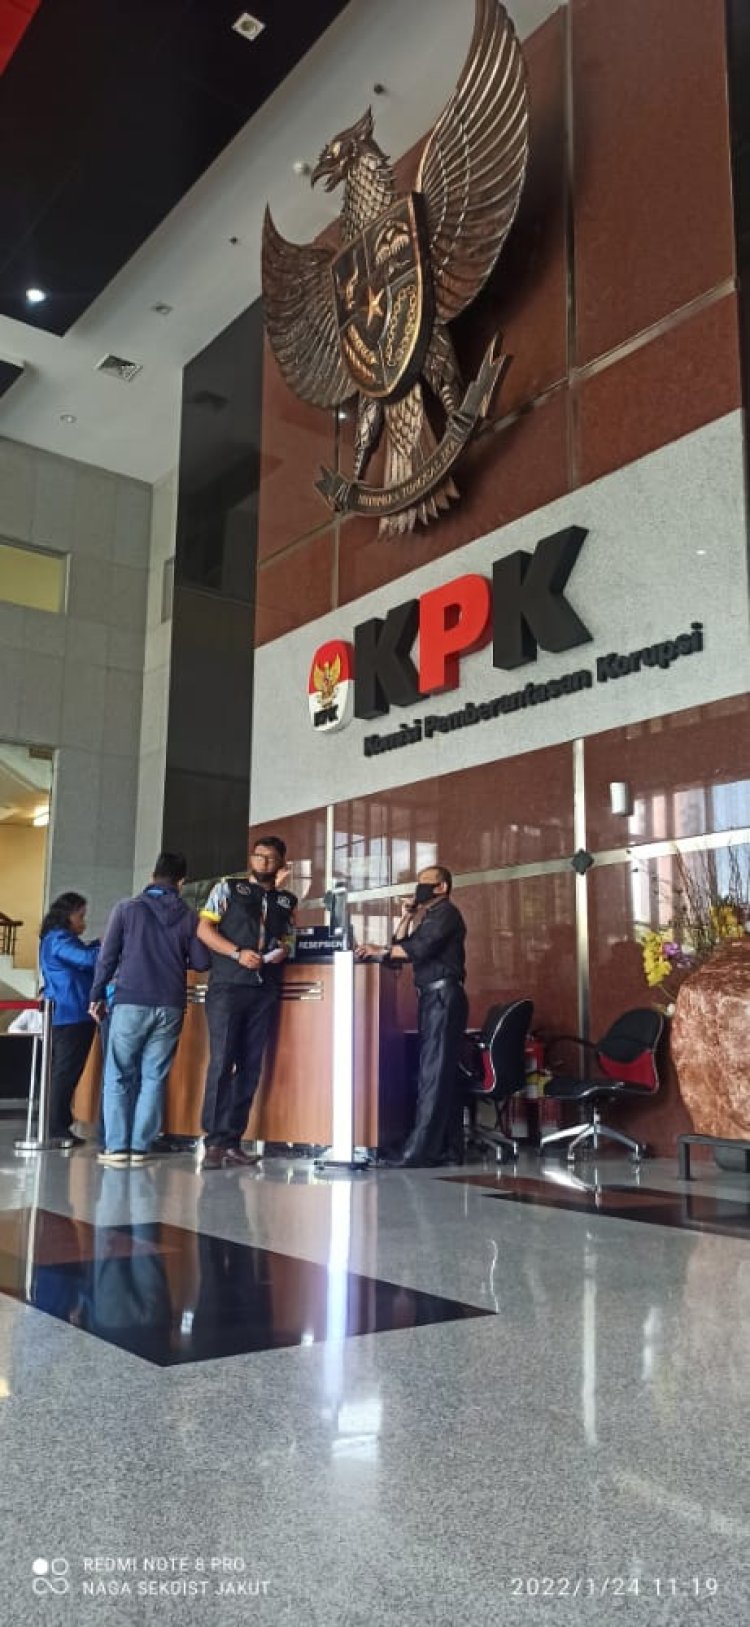 Berkas Laporan Diterima dan Sedang Ditelaah Tim Hukum KPK, Perwakilan Tim AMHLS Dipanggil ke KPK